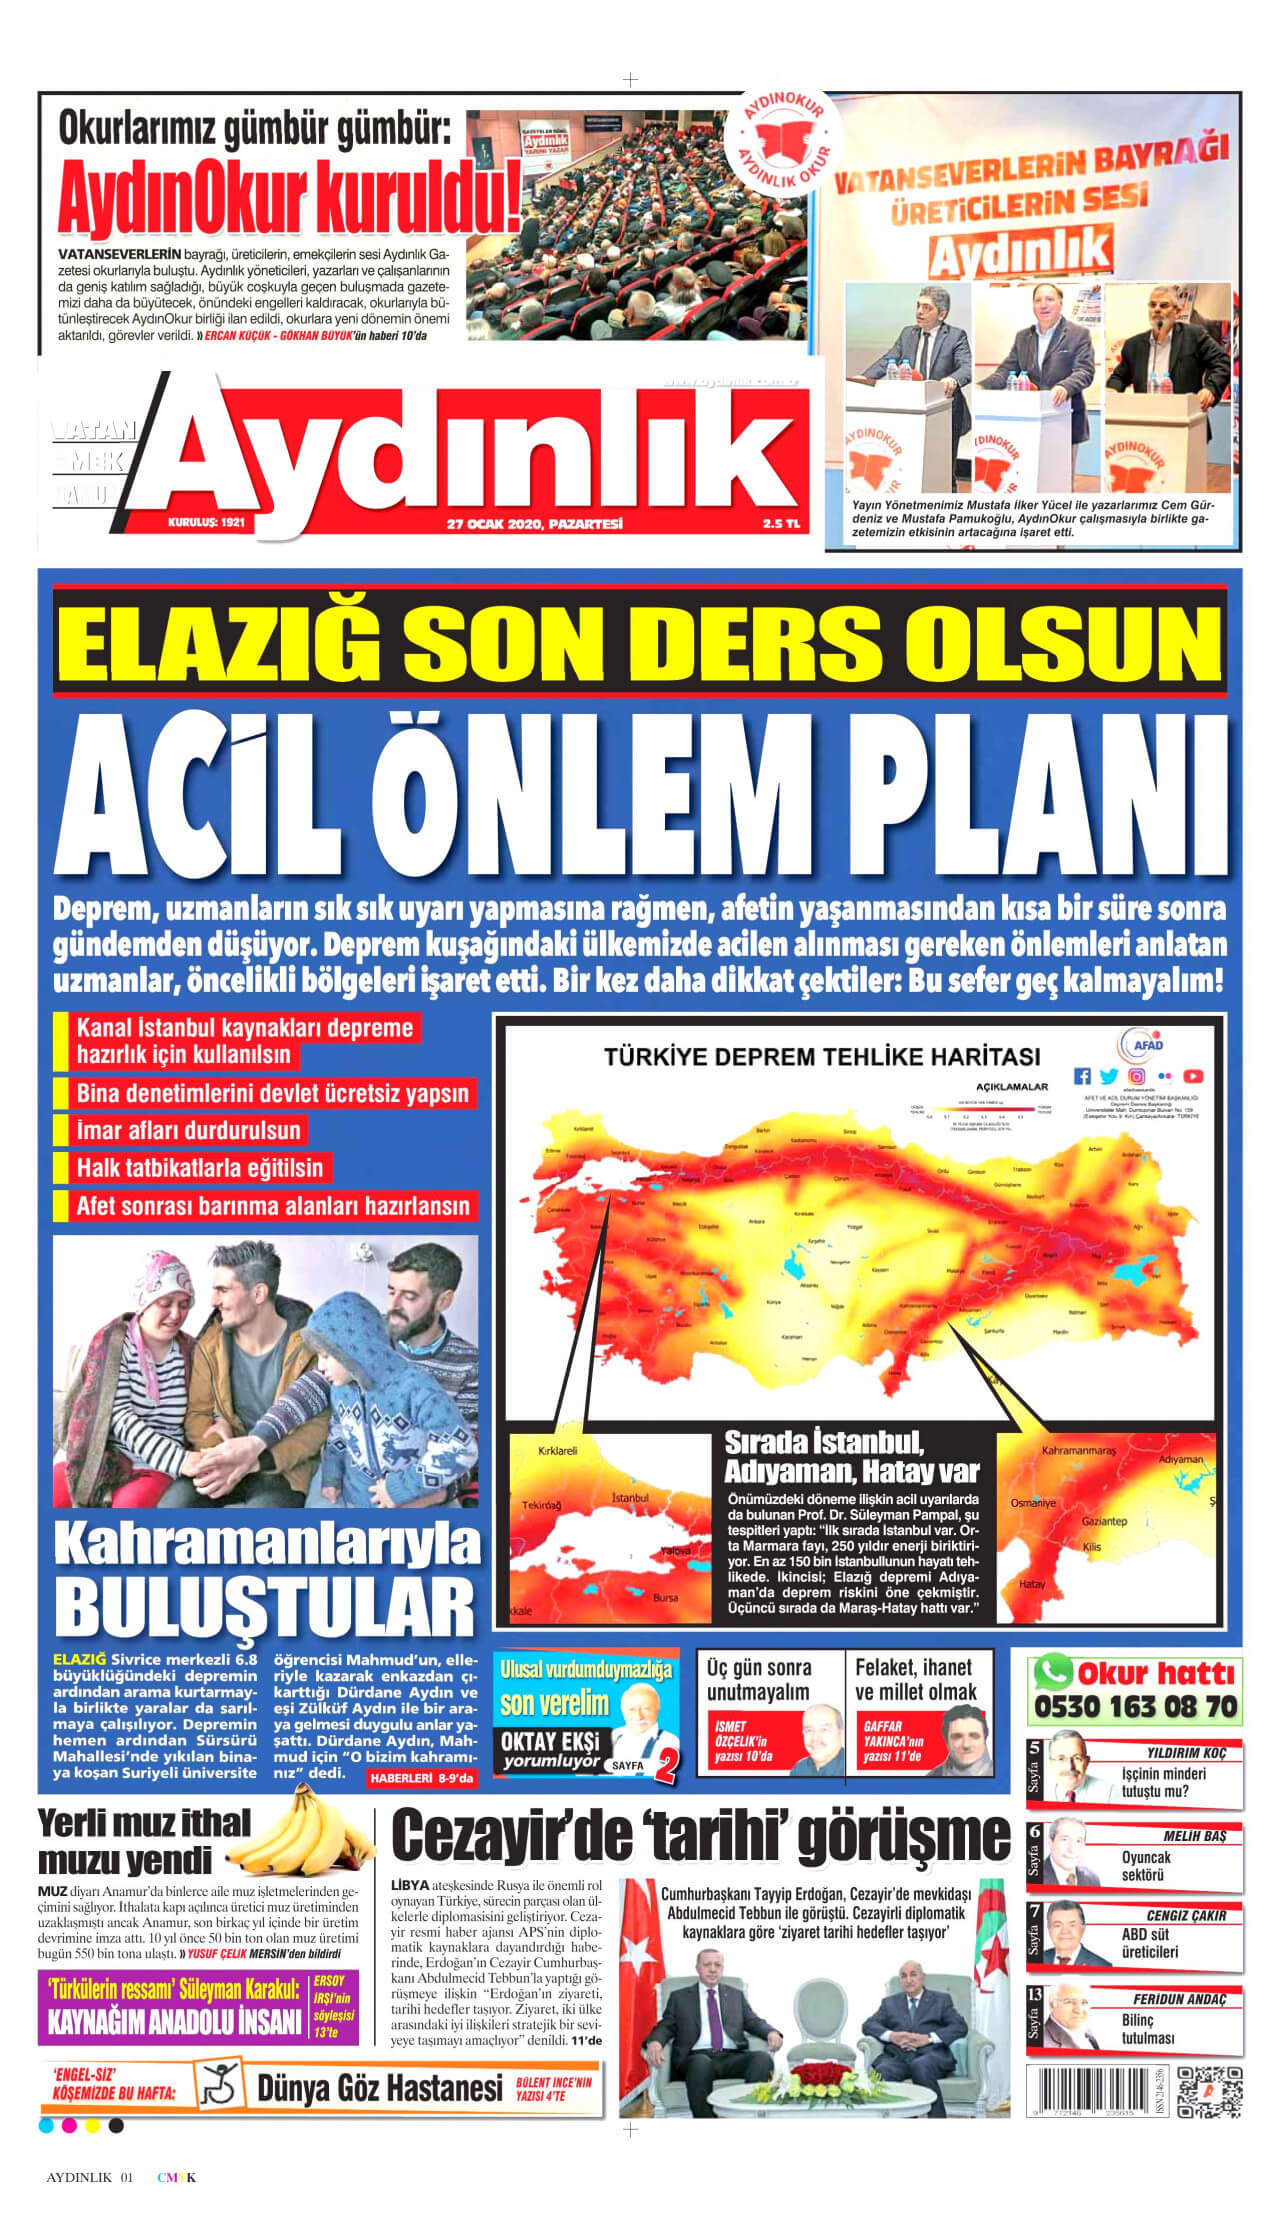 Turkish Newspapers 27 Aydinlik